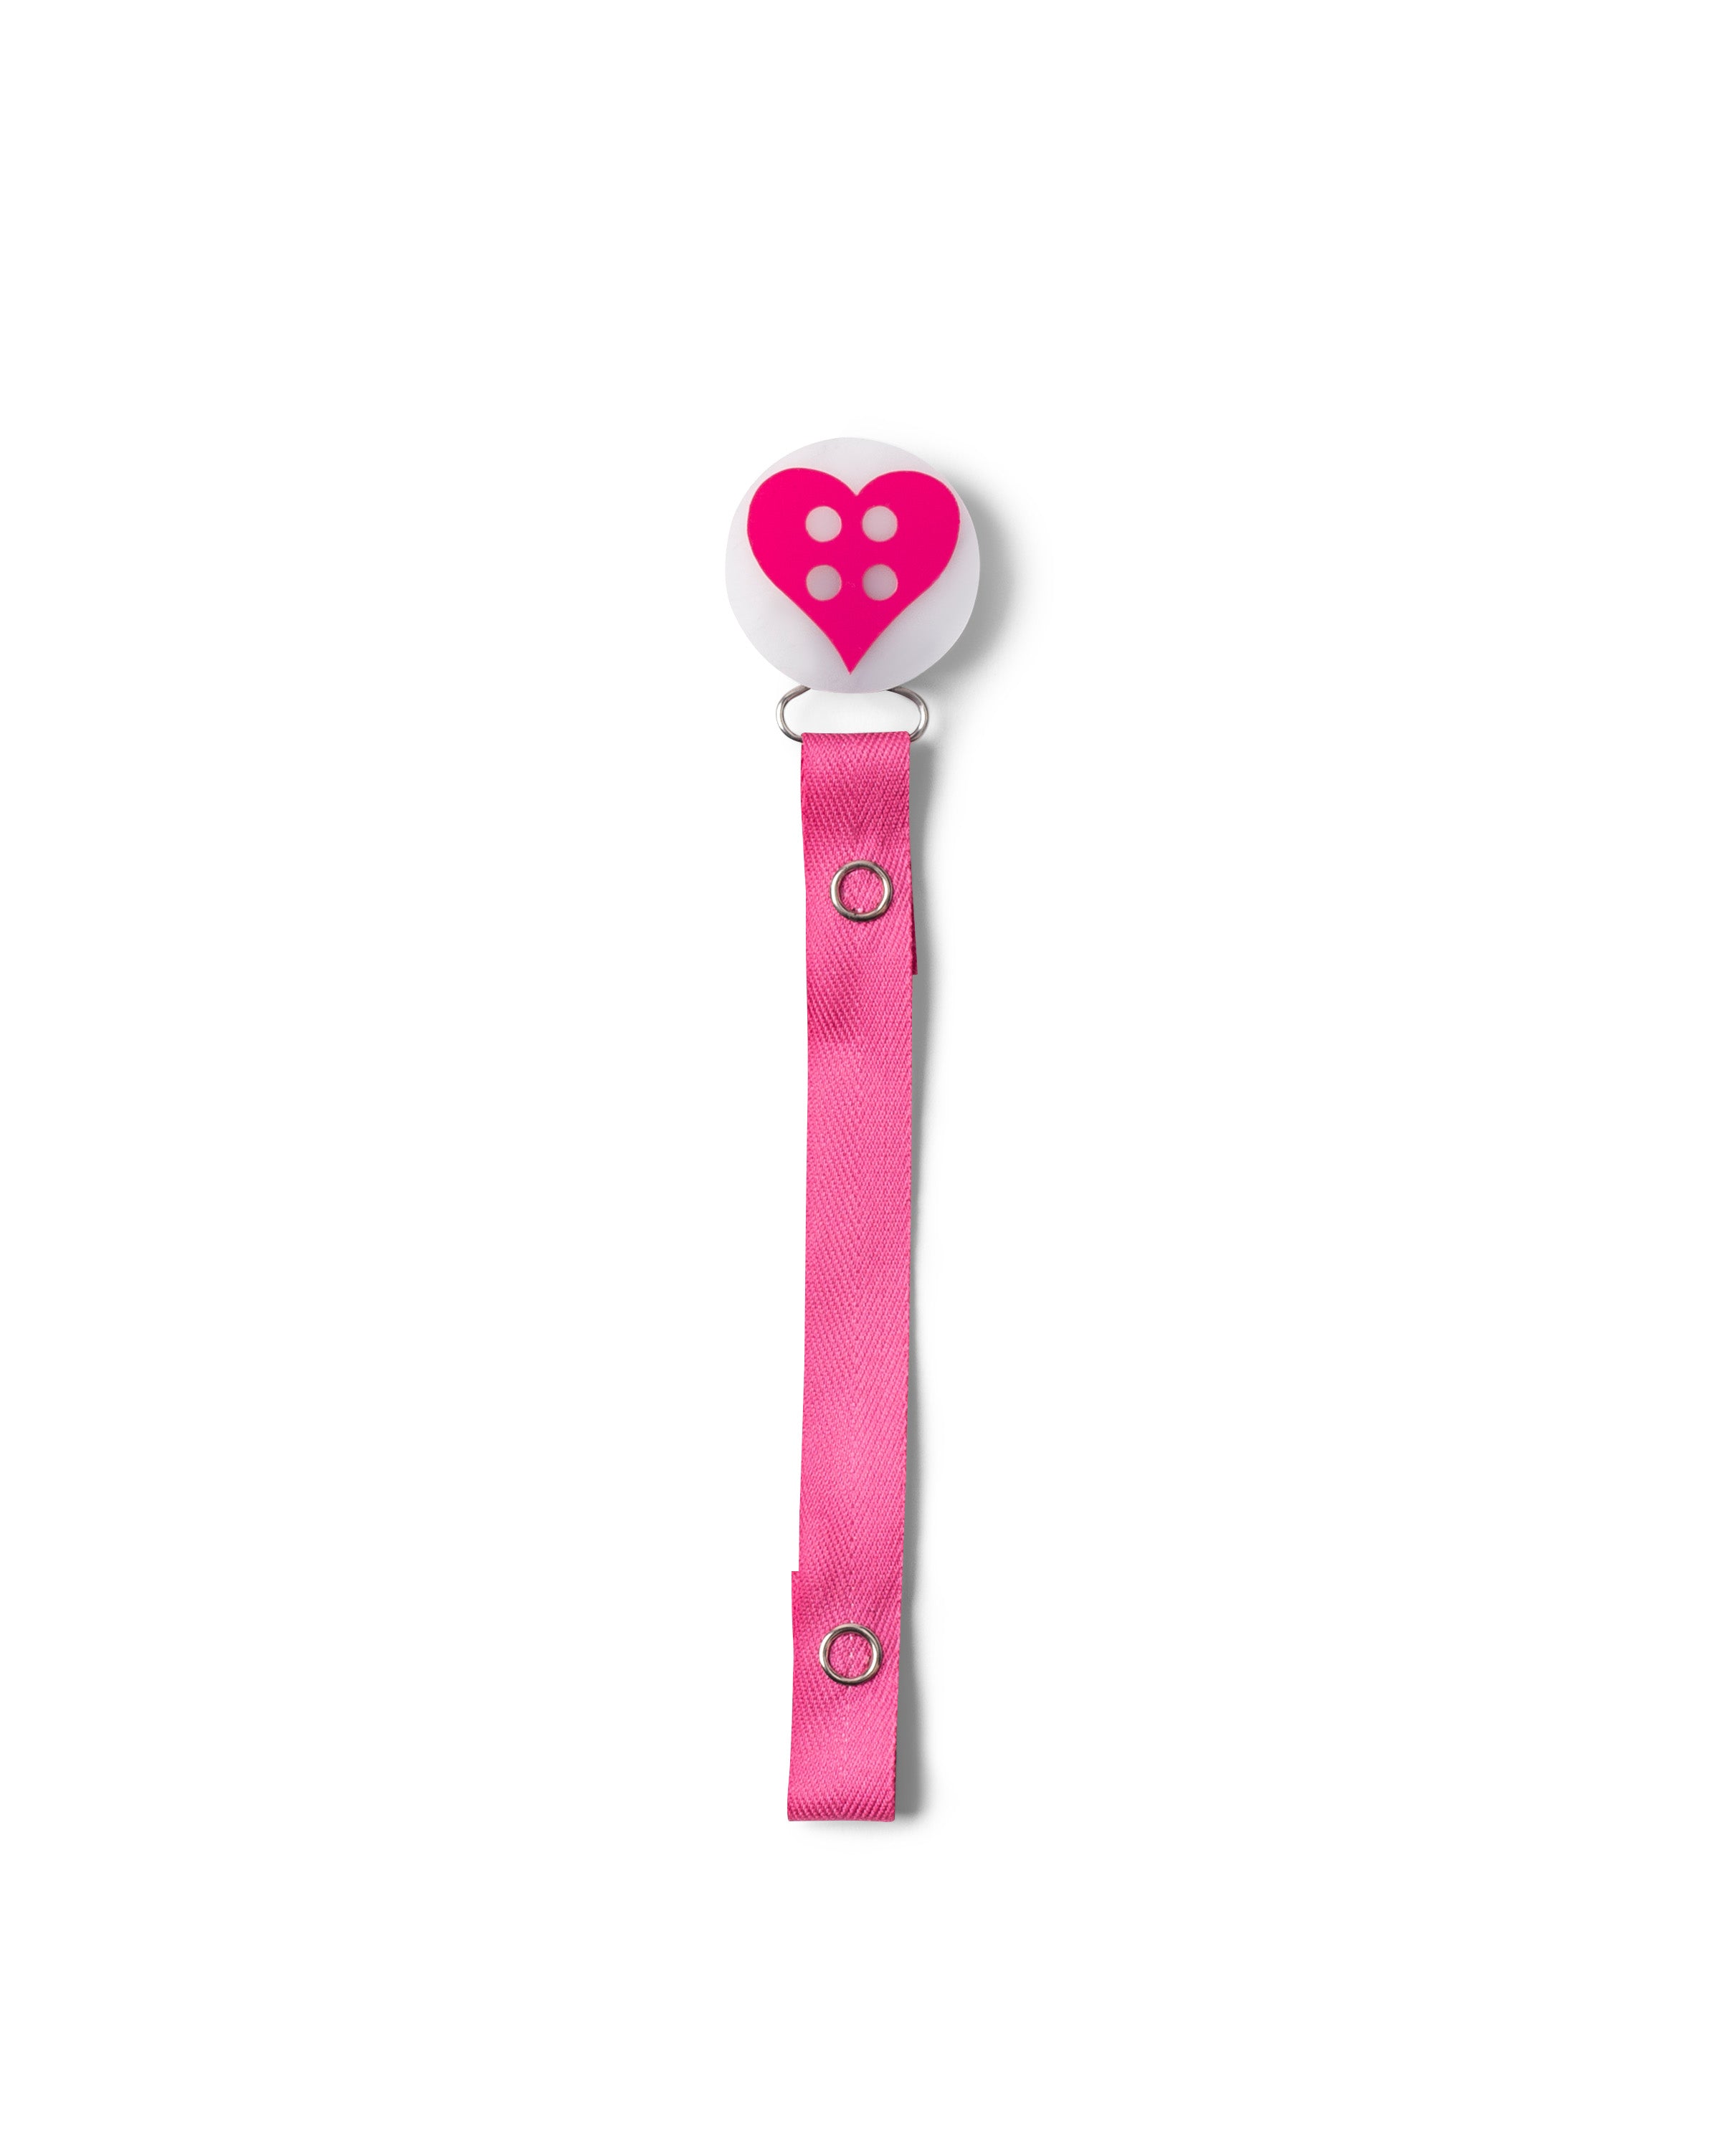 Classy Paci fun "cute as a button" Hot pink heart, denim/black for baby toddler girls pacifier clip